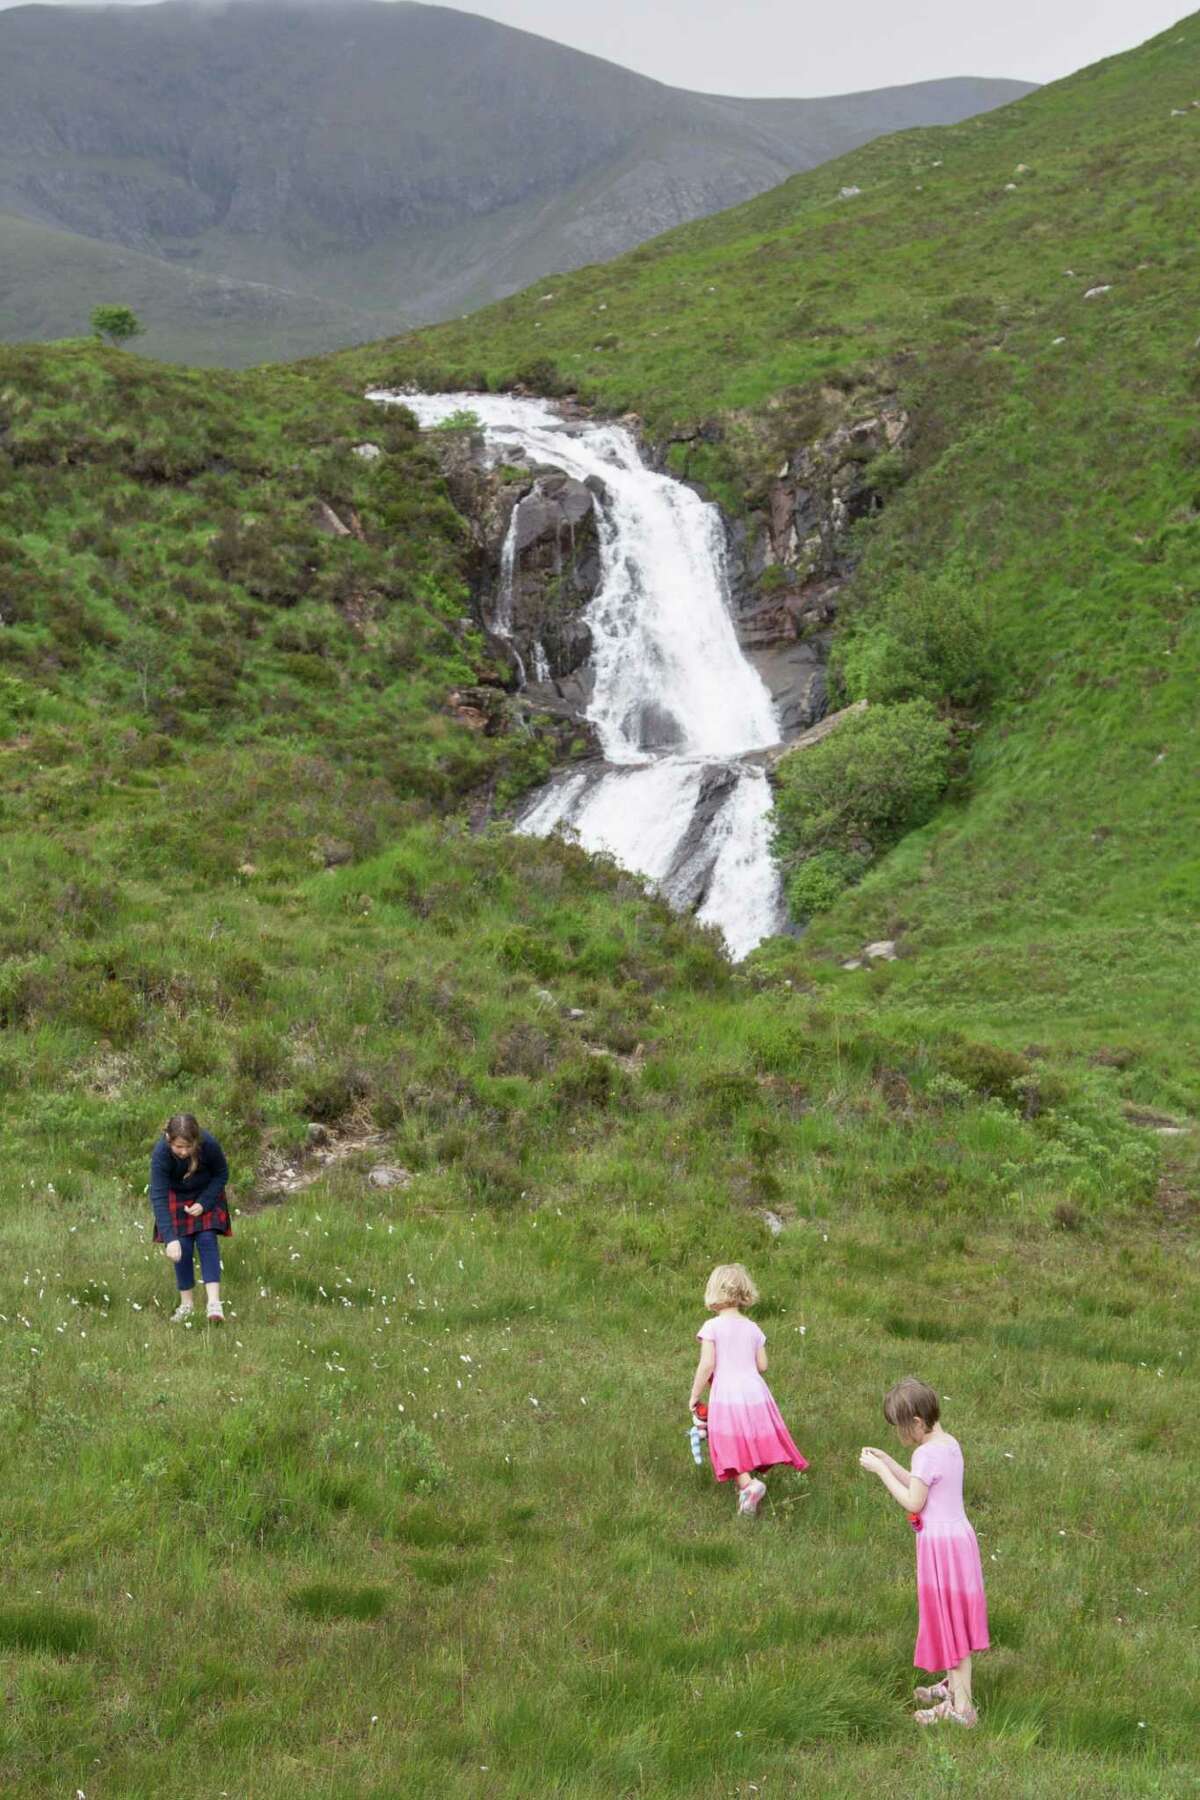 Right: Children enjoy a roadside waterfall on the Isle of Skye.